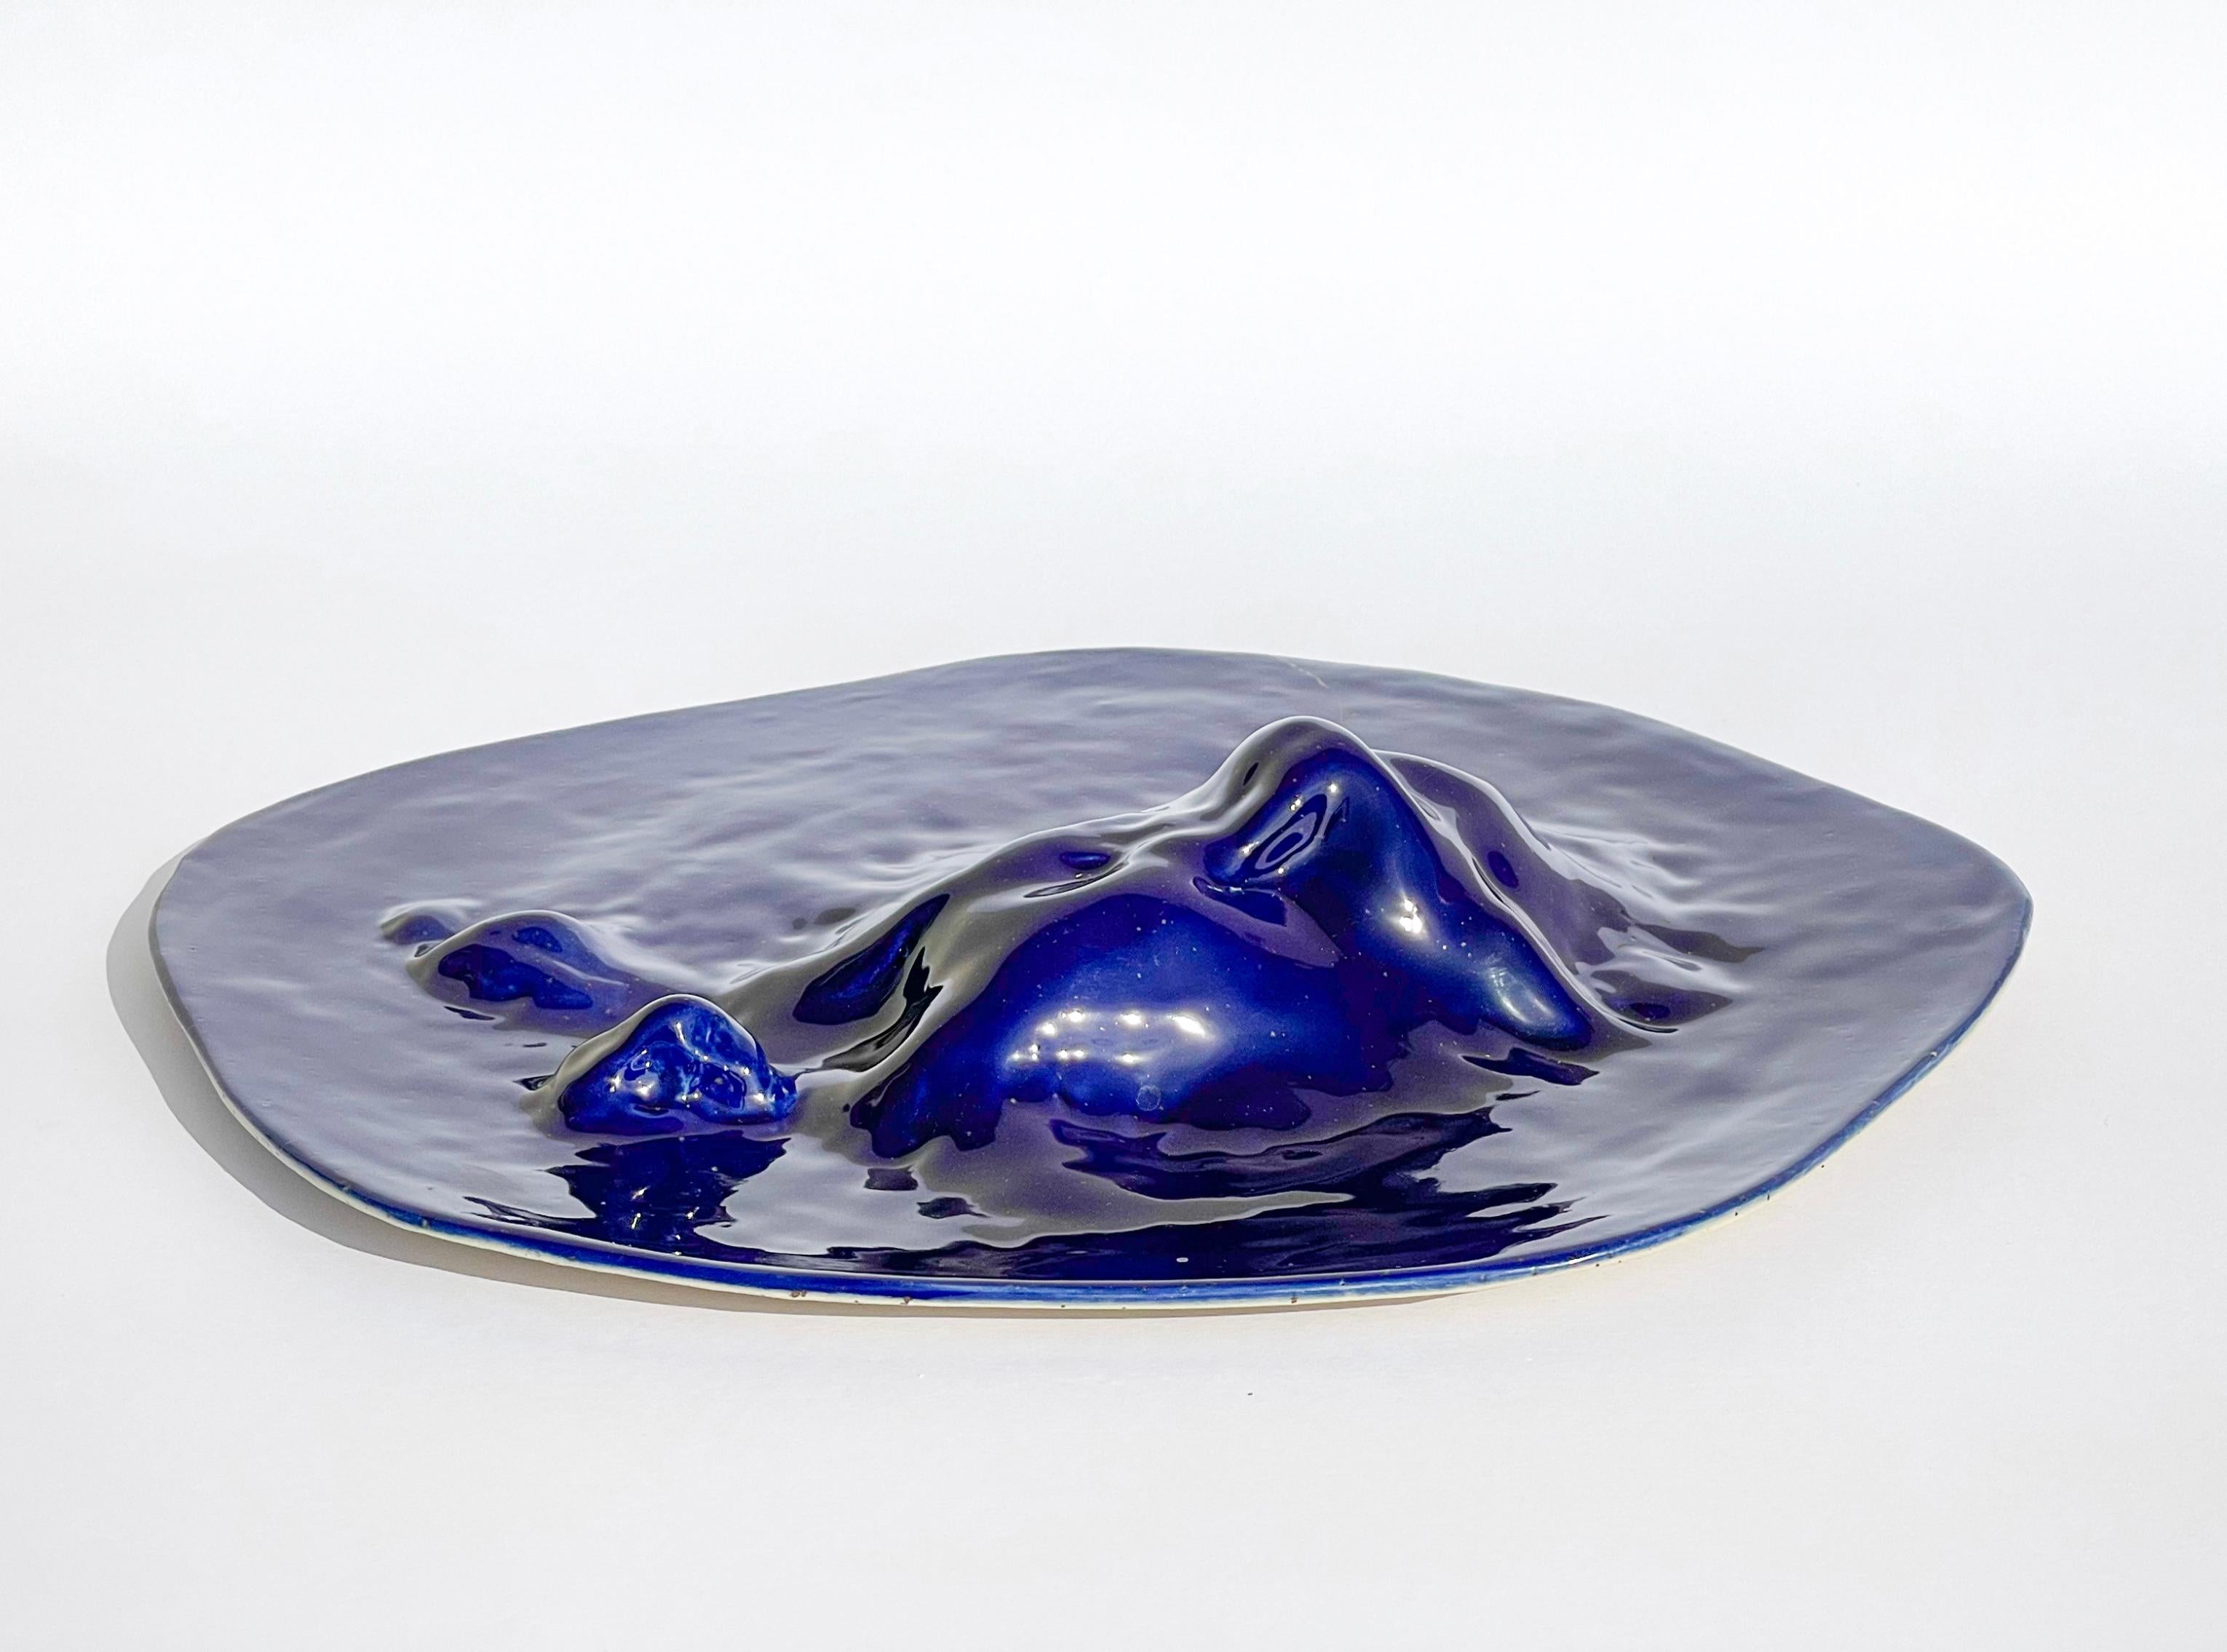 Ceramic Unique Sculptural 'Gongshi' Plates N0.15 Objet D'art Cobalt Blue For Sale